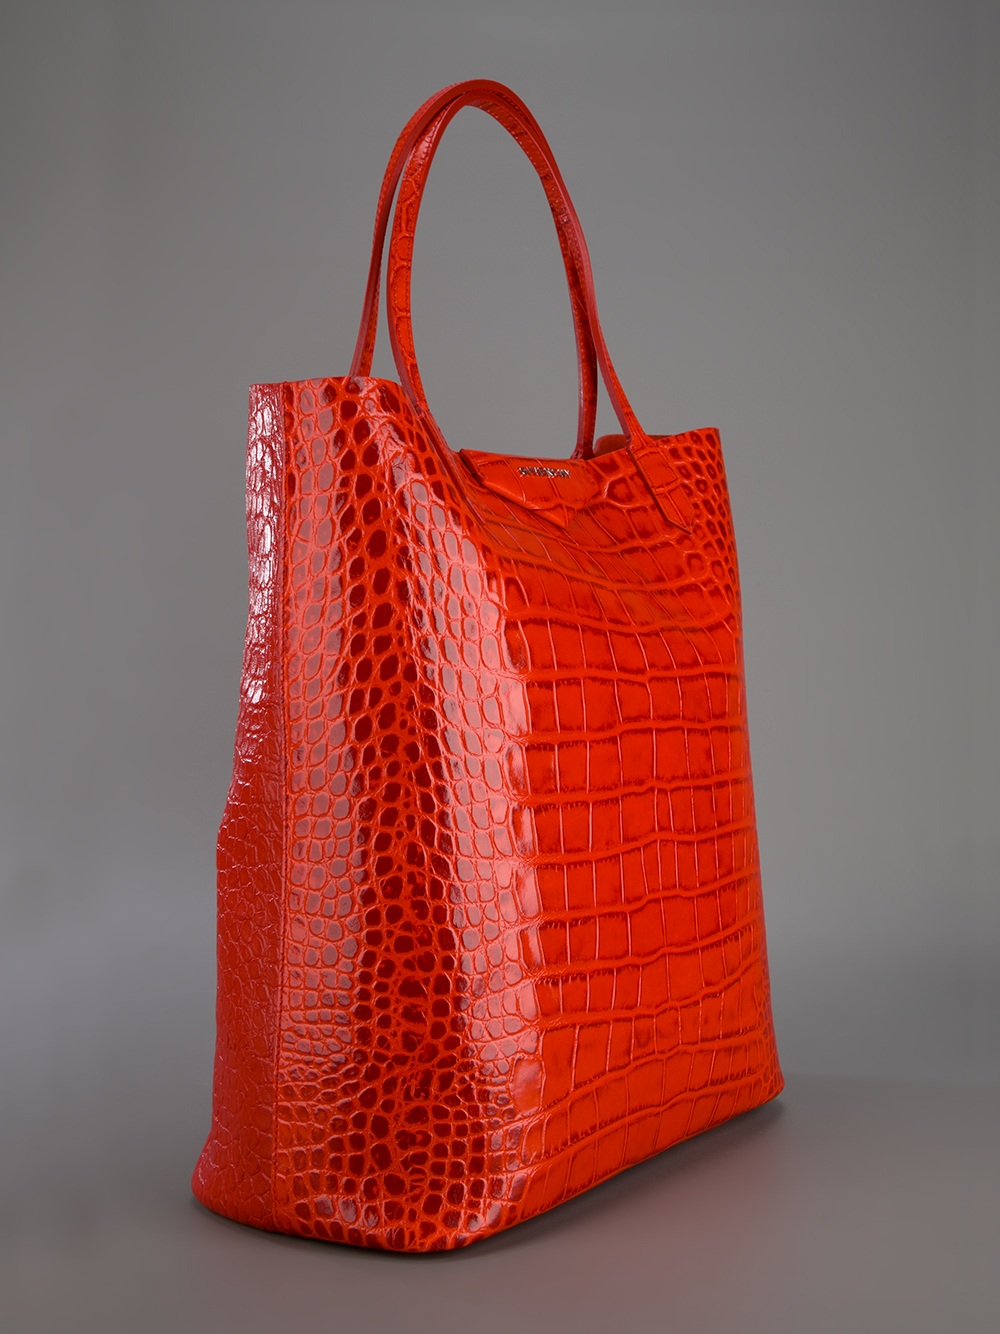 Lyst - Givenchy Antigona Shopper Tote in Red